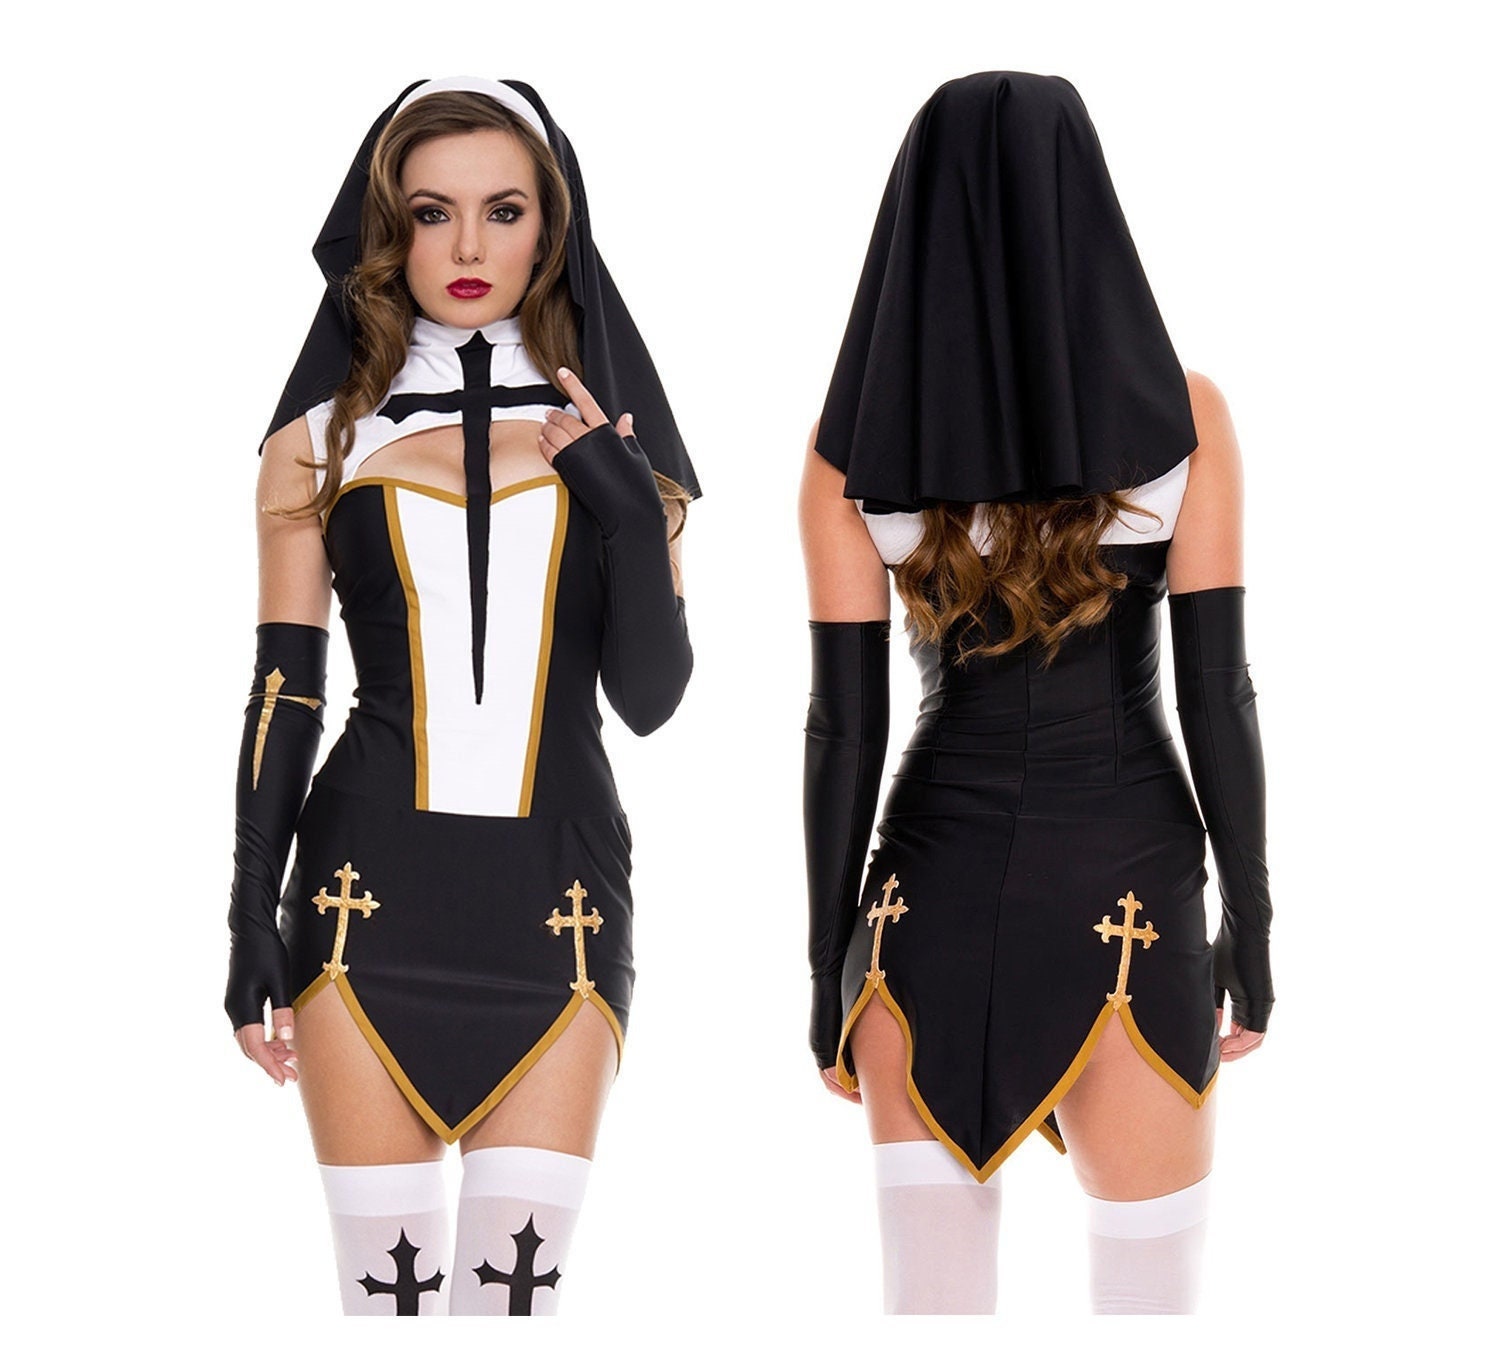 Sexy Nun Costume - Etsy